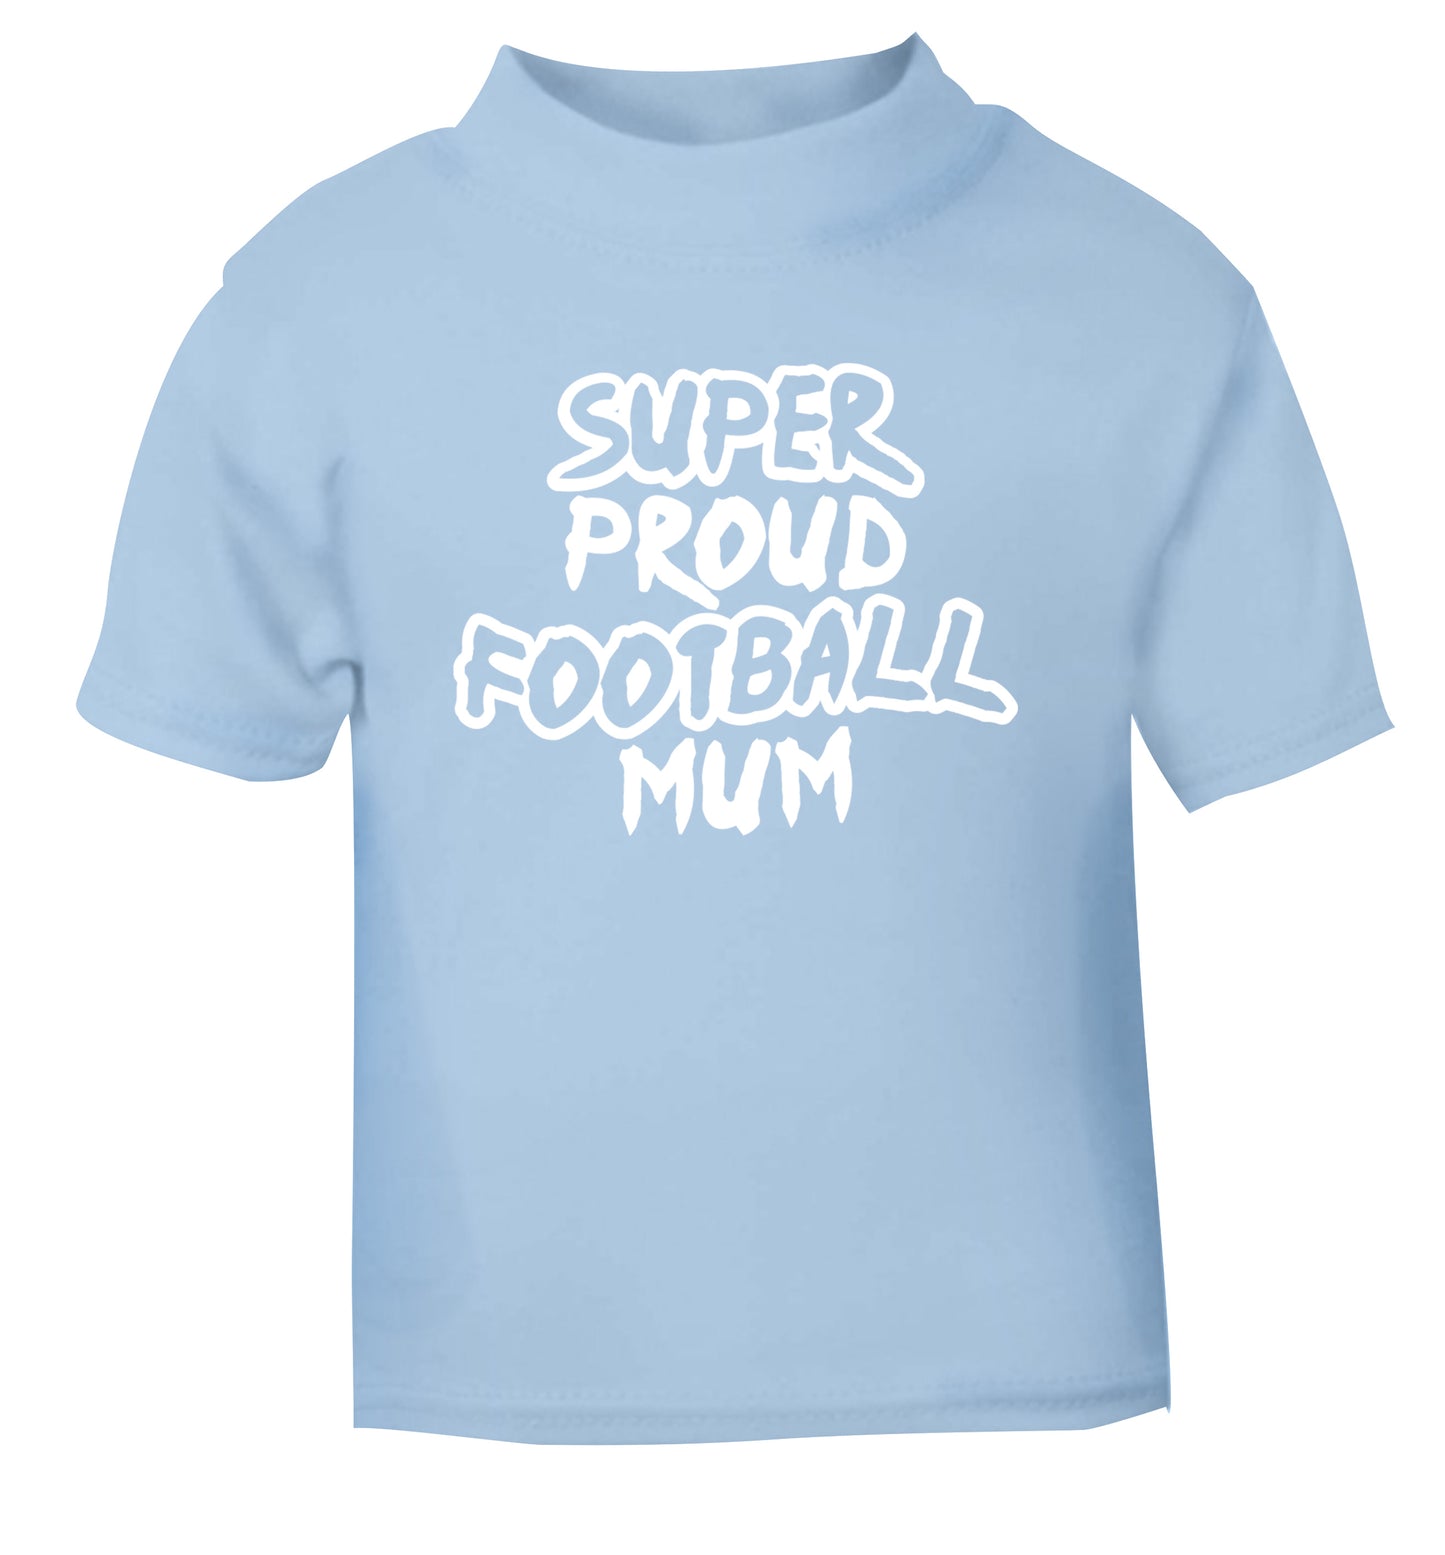 Super proud football mum light blue Baby Toddler Tshirt 2 Years